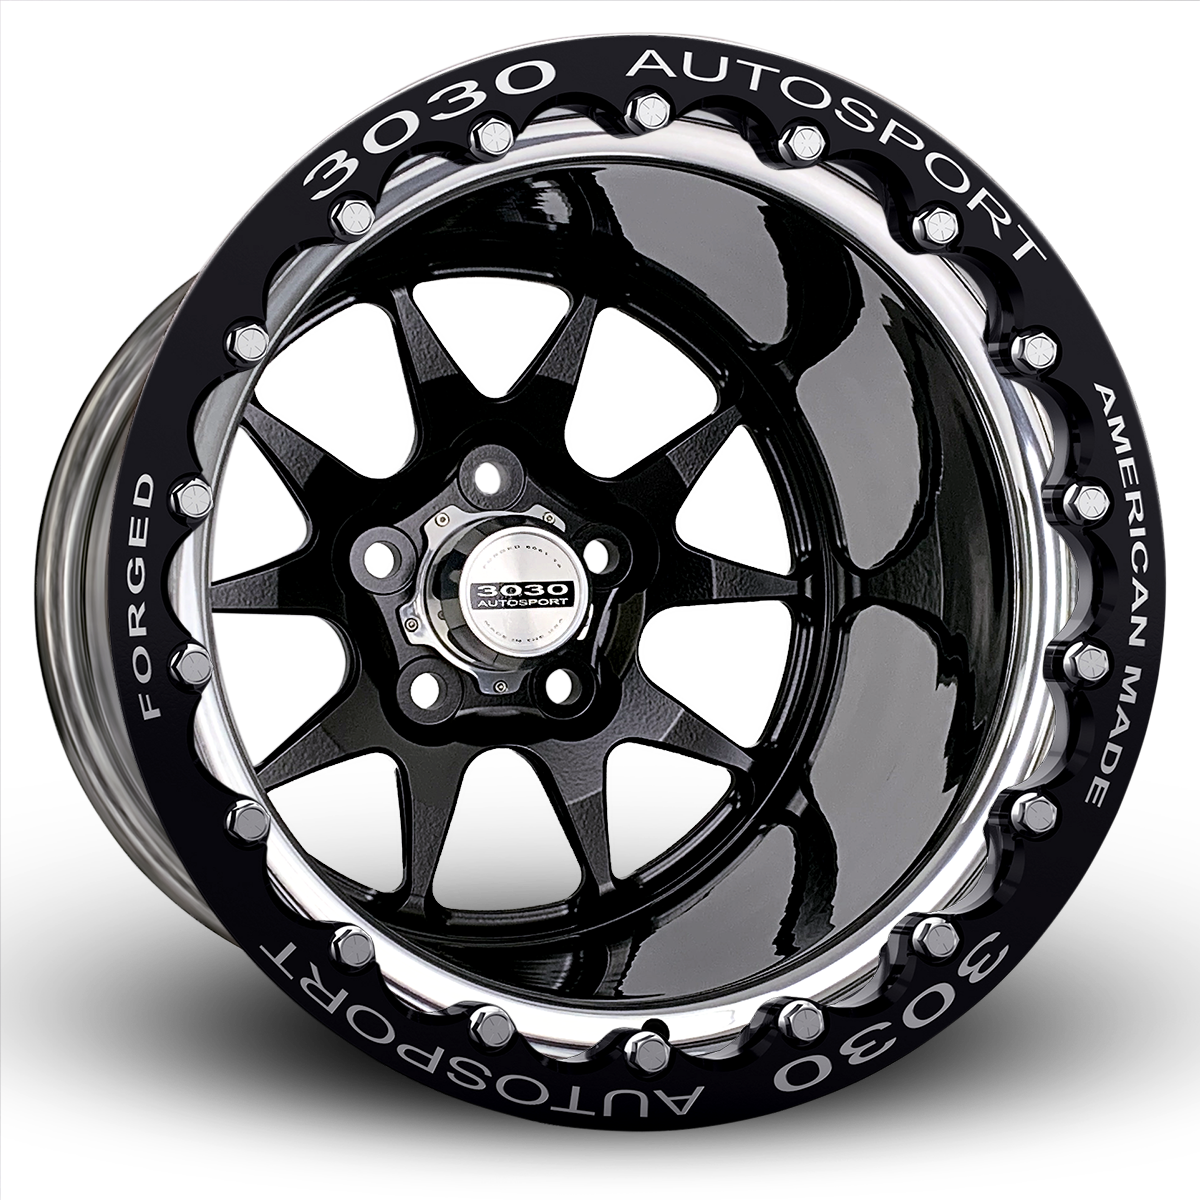 MACH-10 Double-Beadlock Wheel, Size: 15x12", Bolt Pattern: 5x5", Backspace: 5" [Black/Polished]